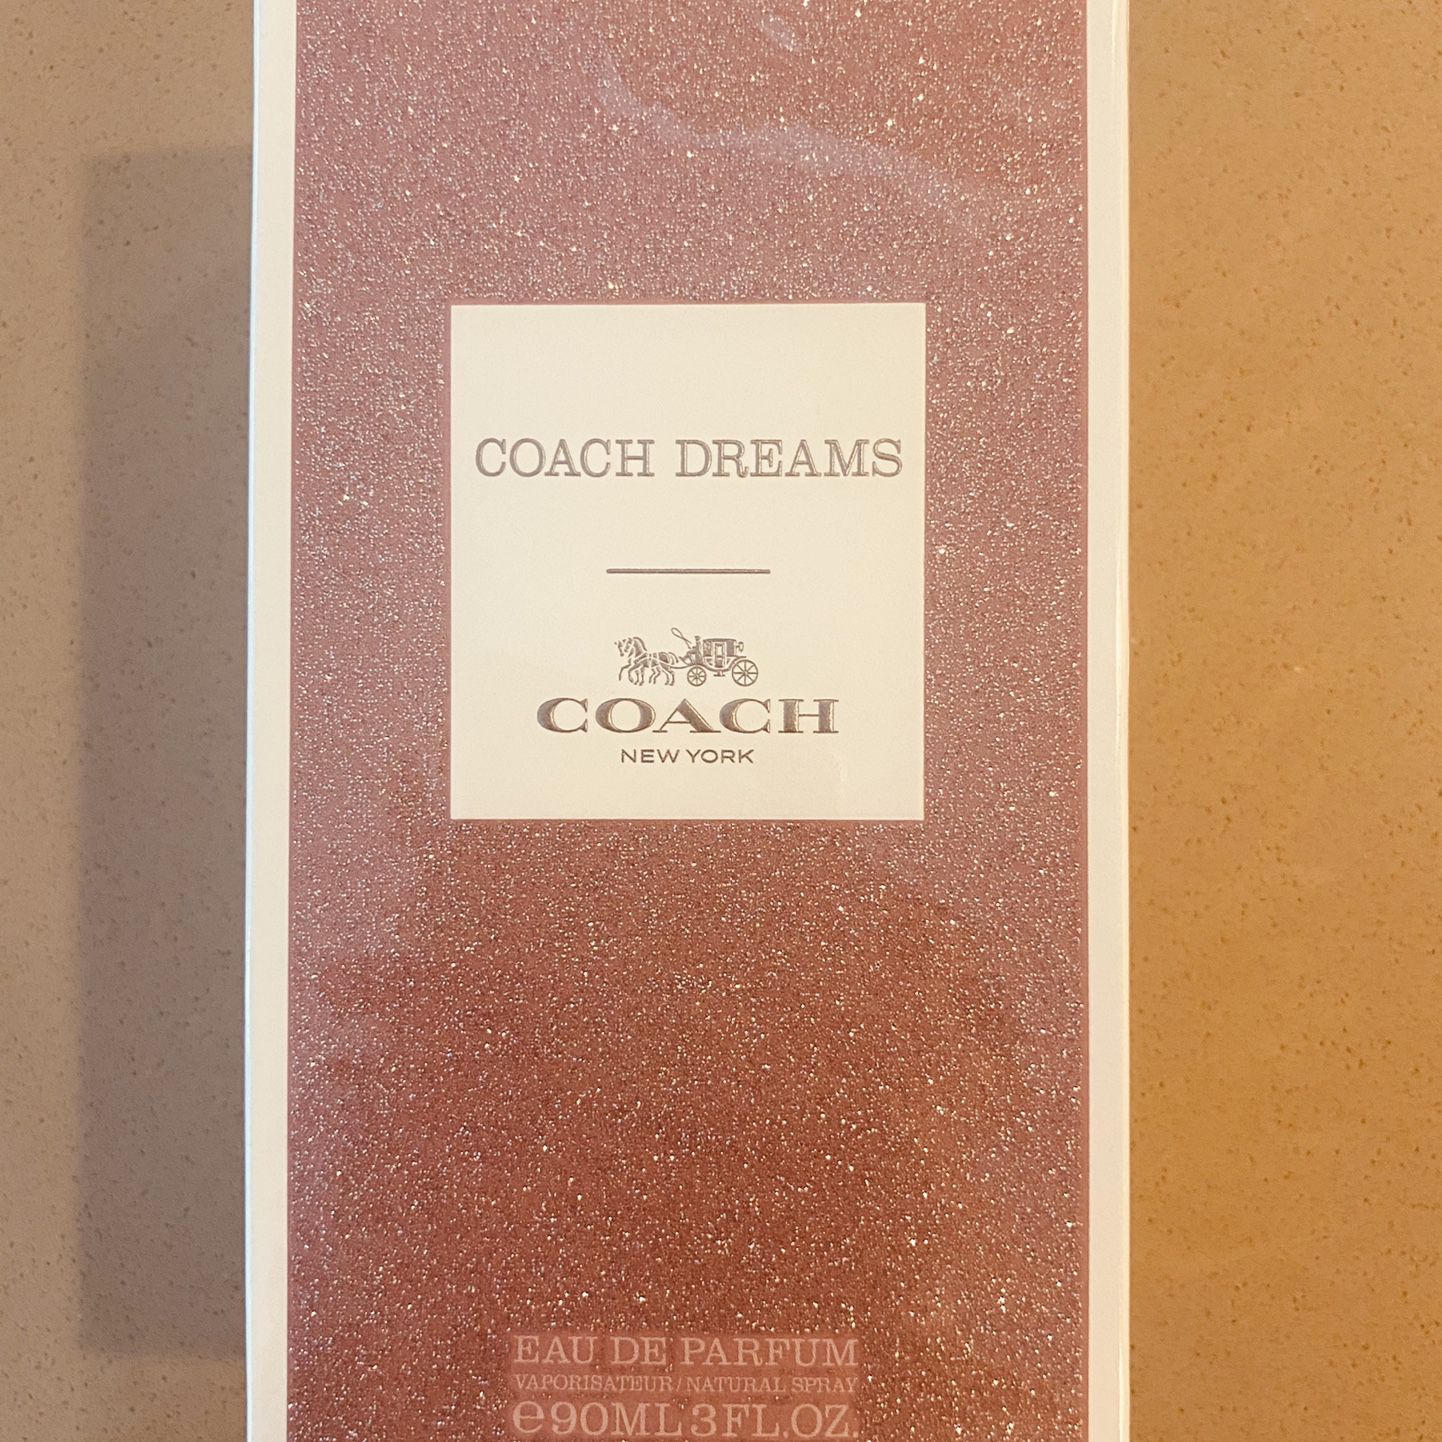 Coach Dreams Perfume 90ML/3FL OZ (New)